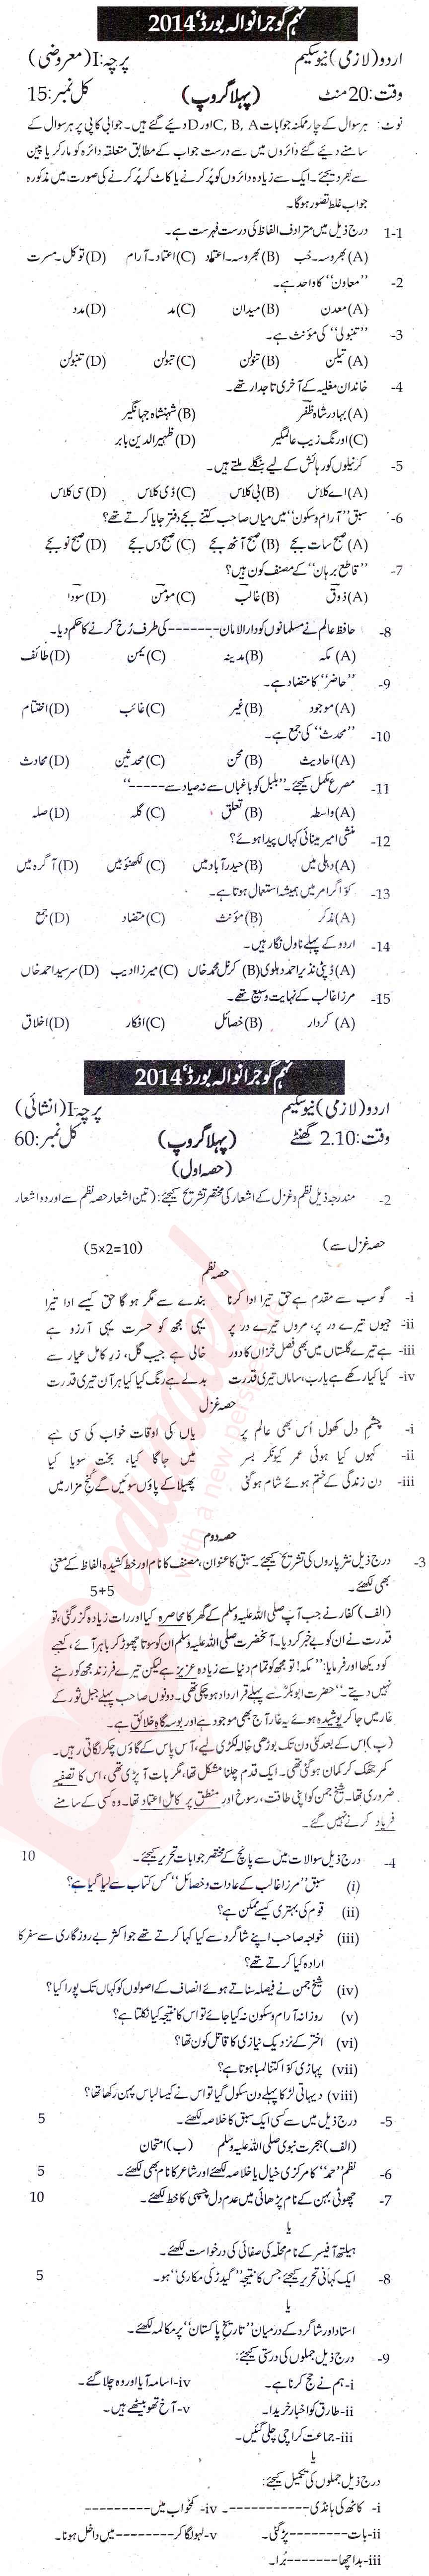 Urdu 9th class Past Paper Group 1 BISE Gujranwala 2014